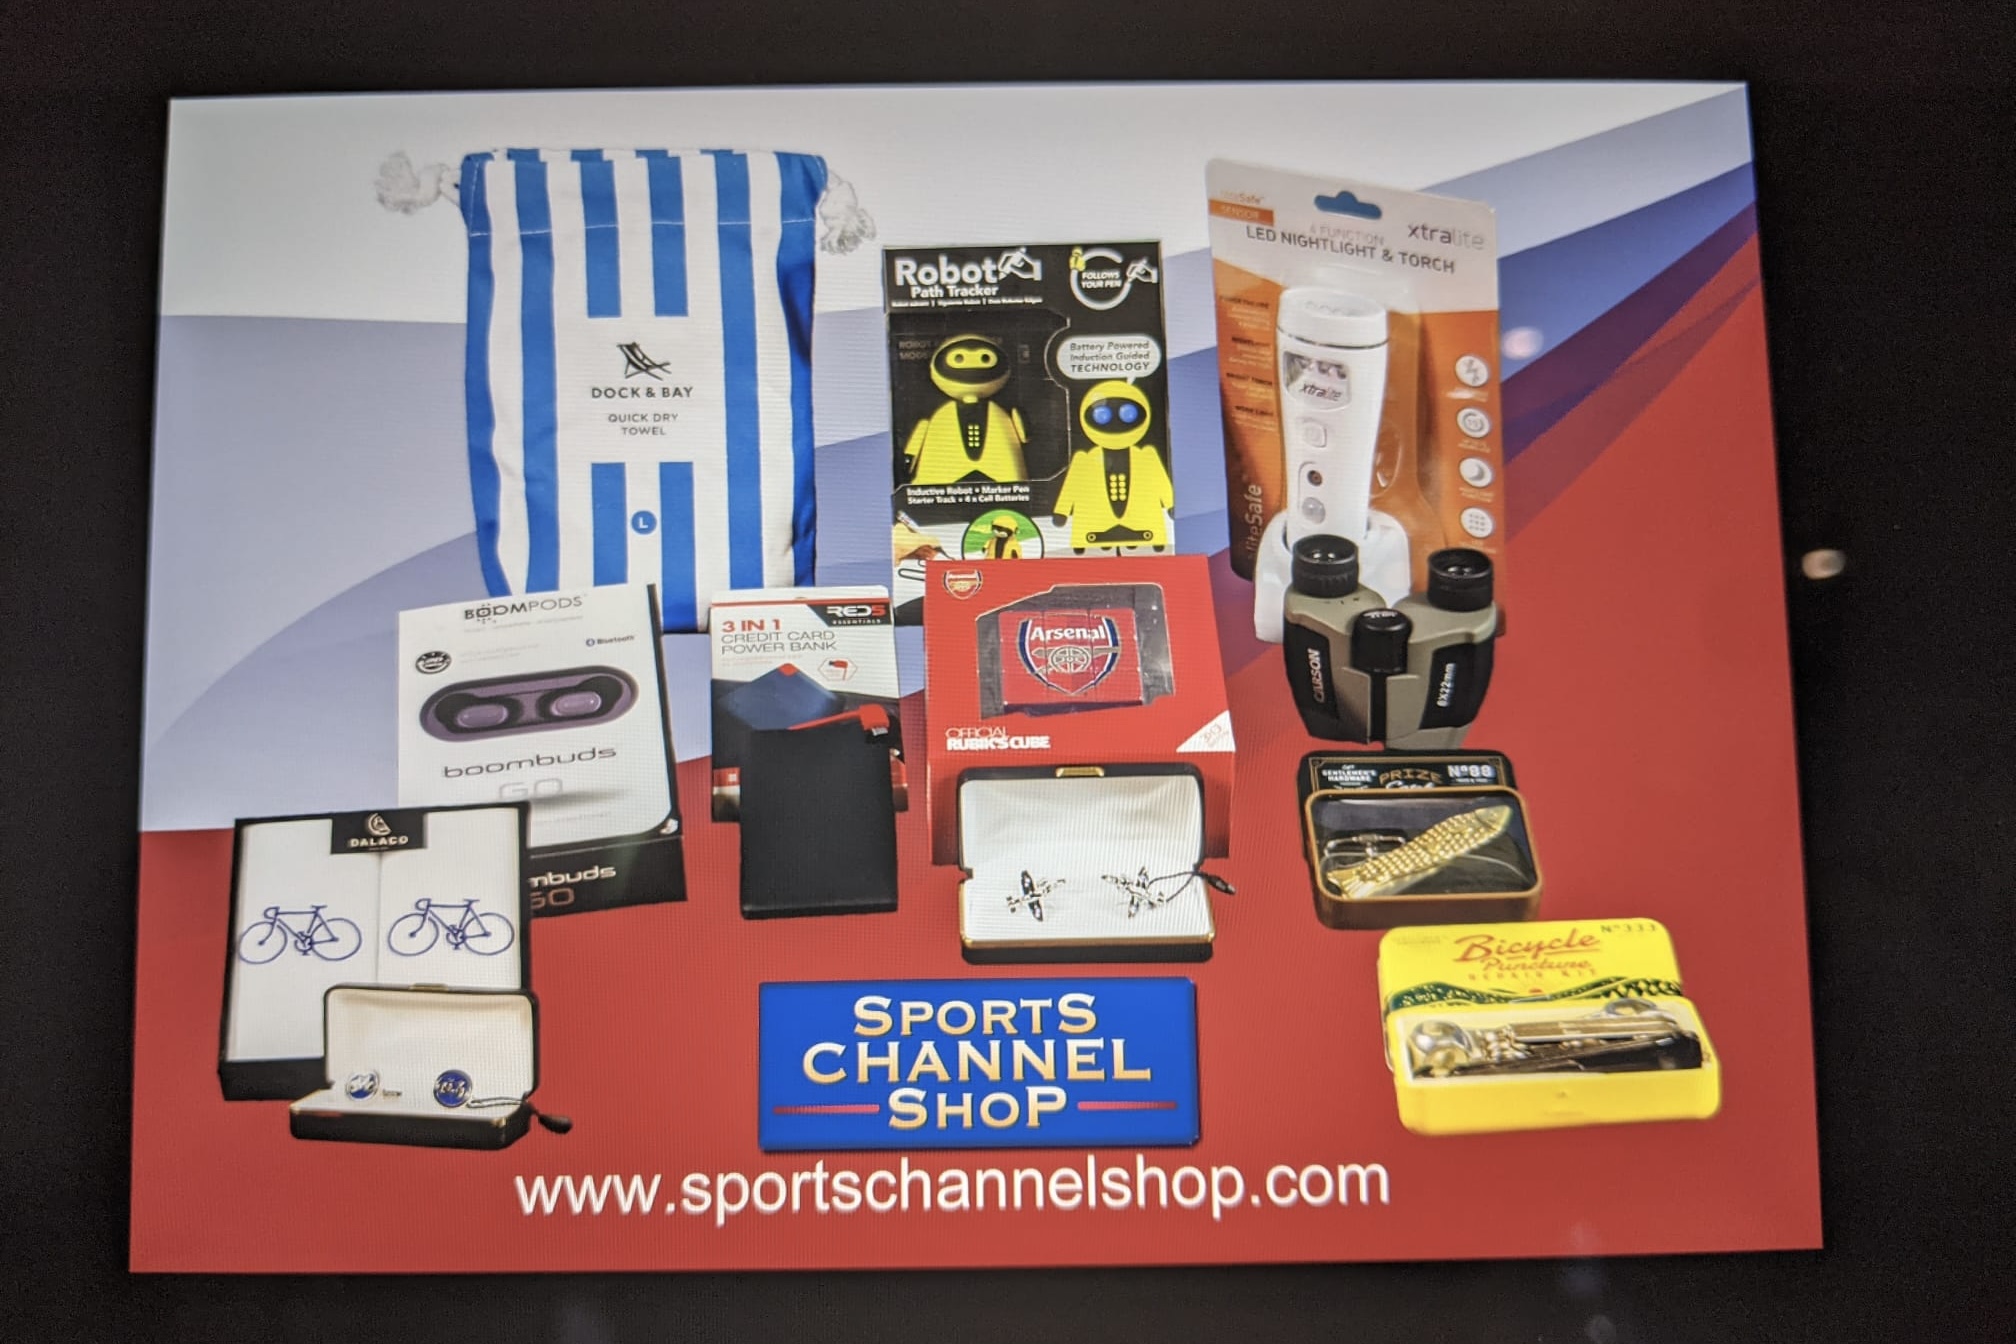 Sports Channel Shop